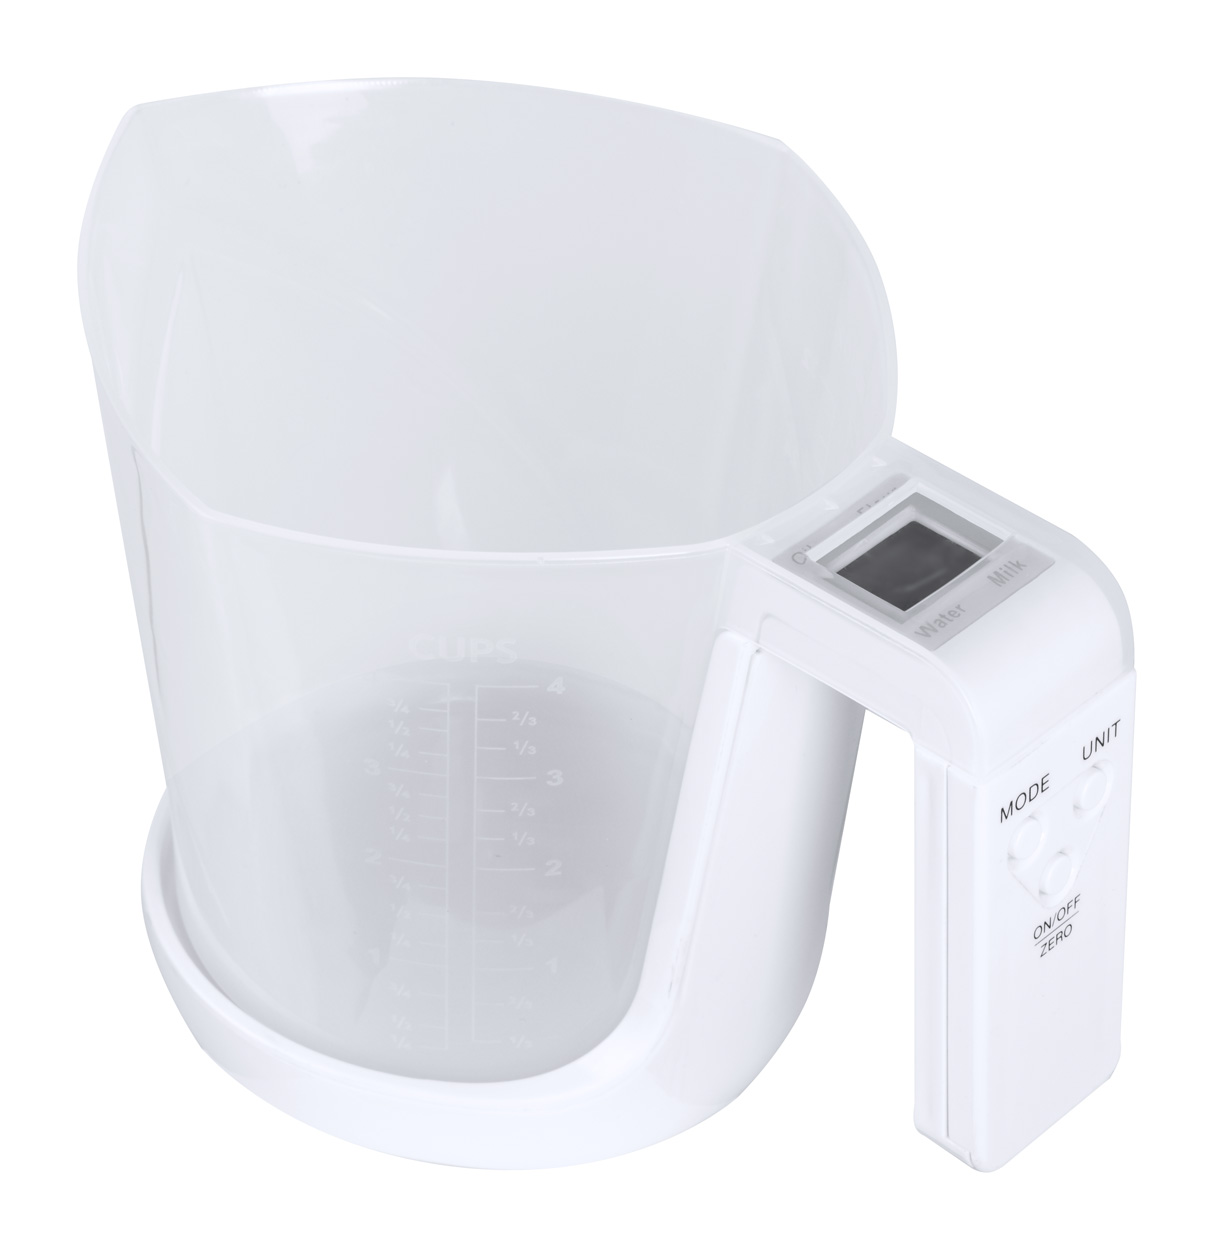 Plazix measuring jug White